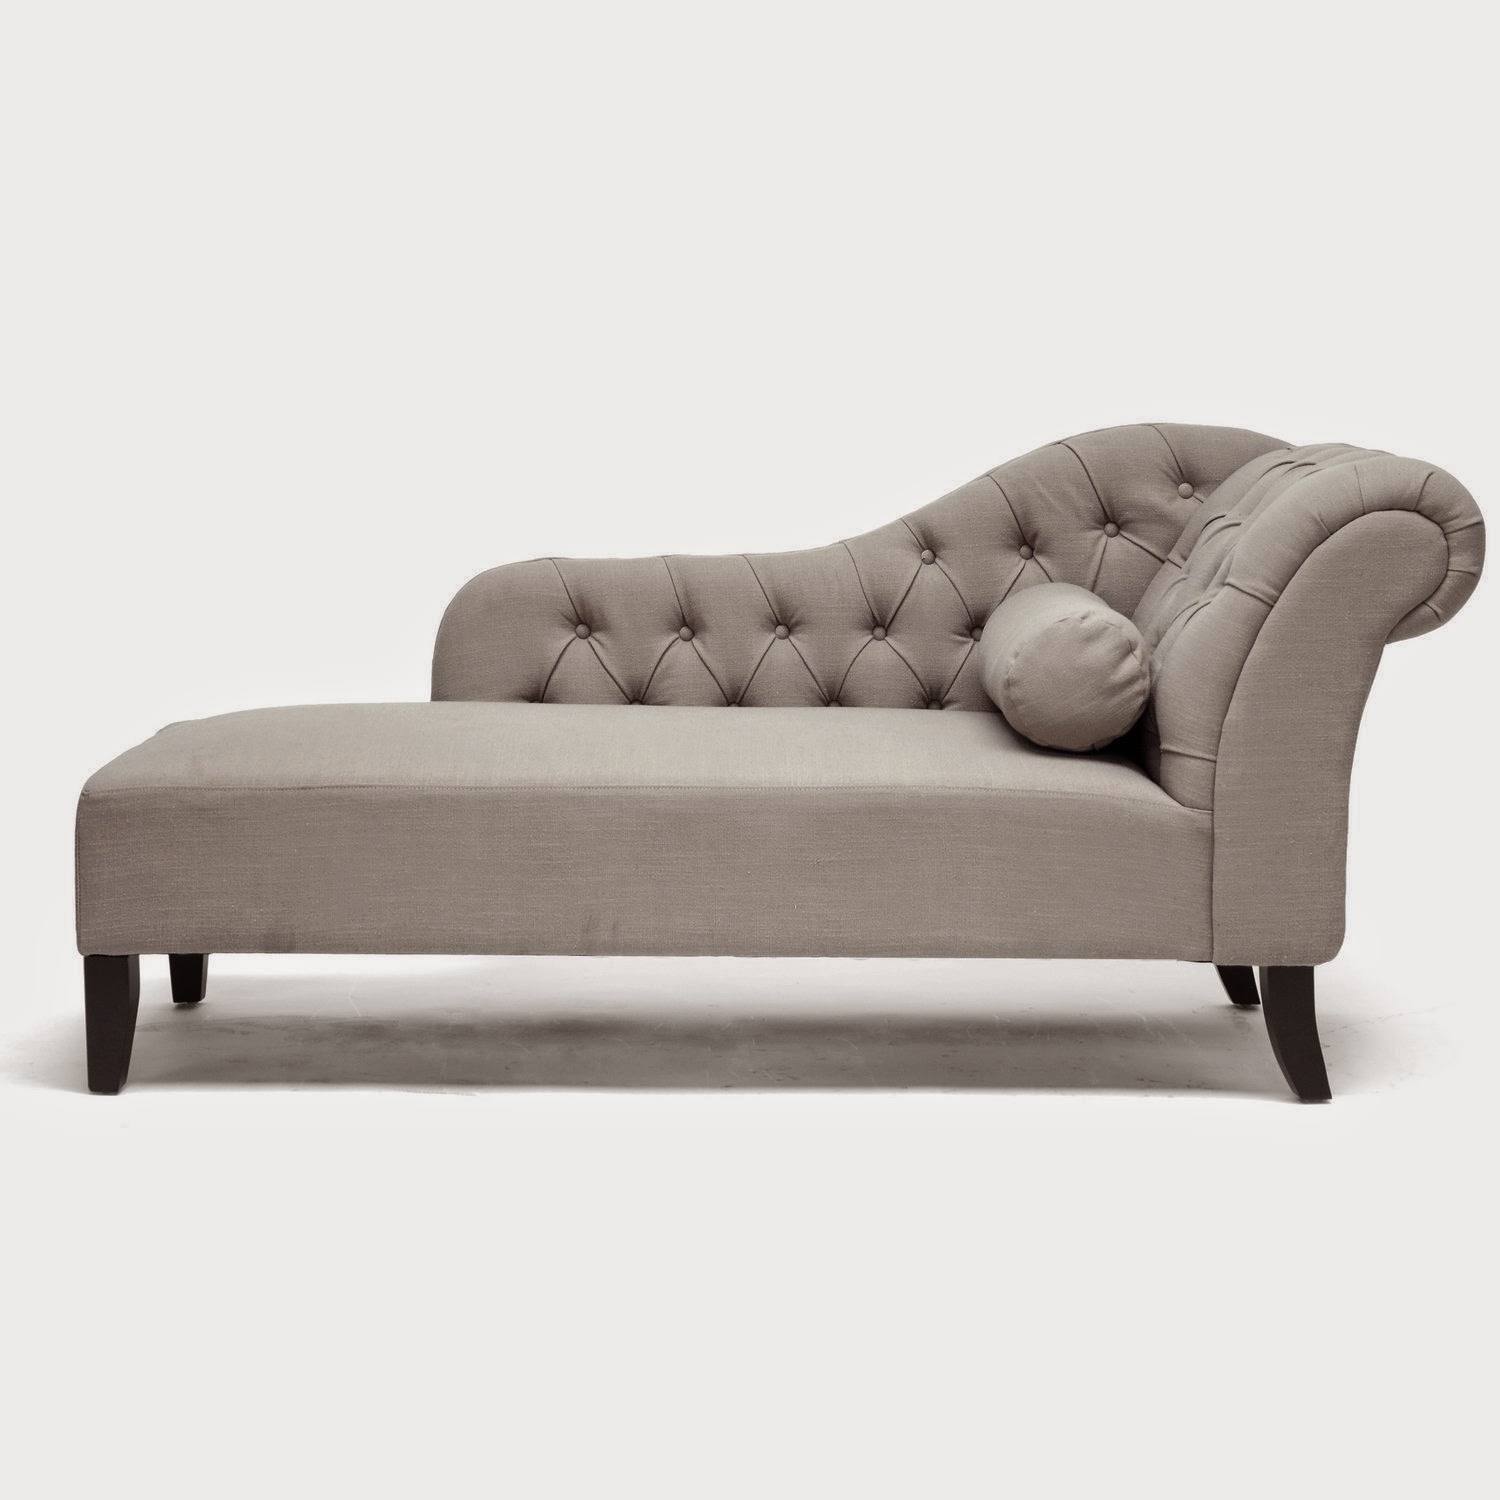 Baxton studio aphrodite tufted putty gray linen modern chaise lounge